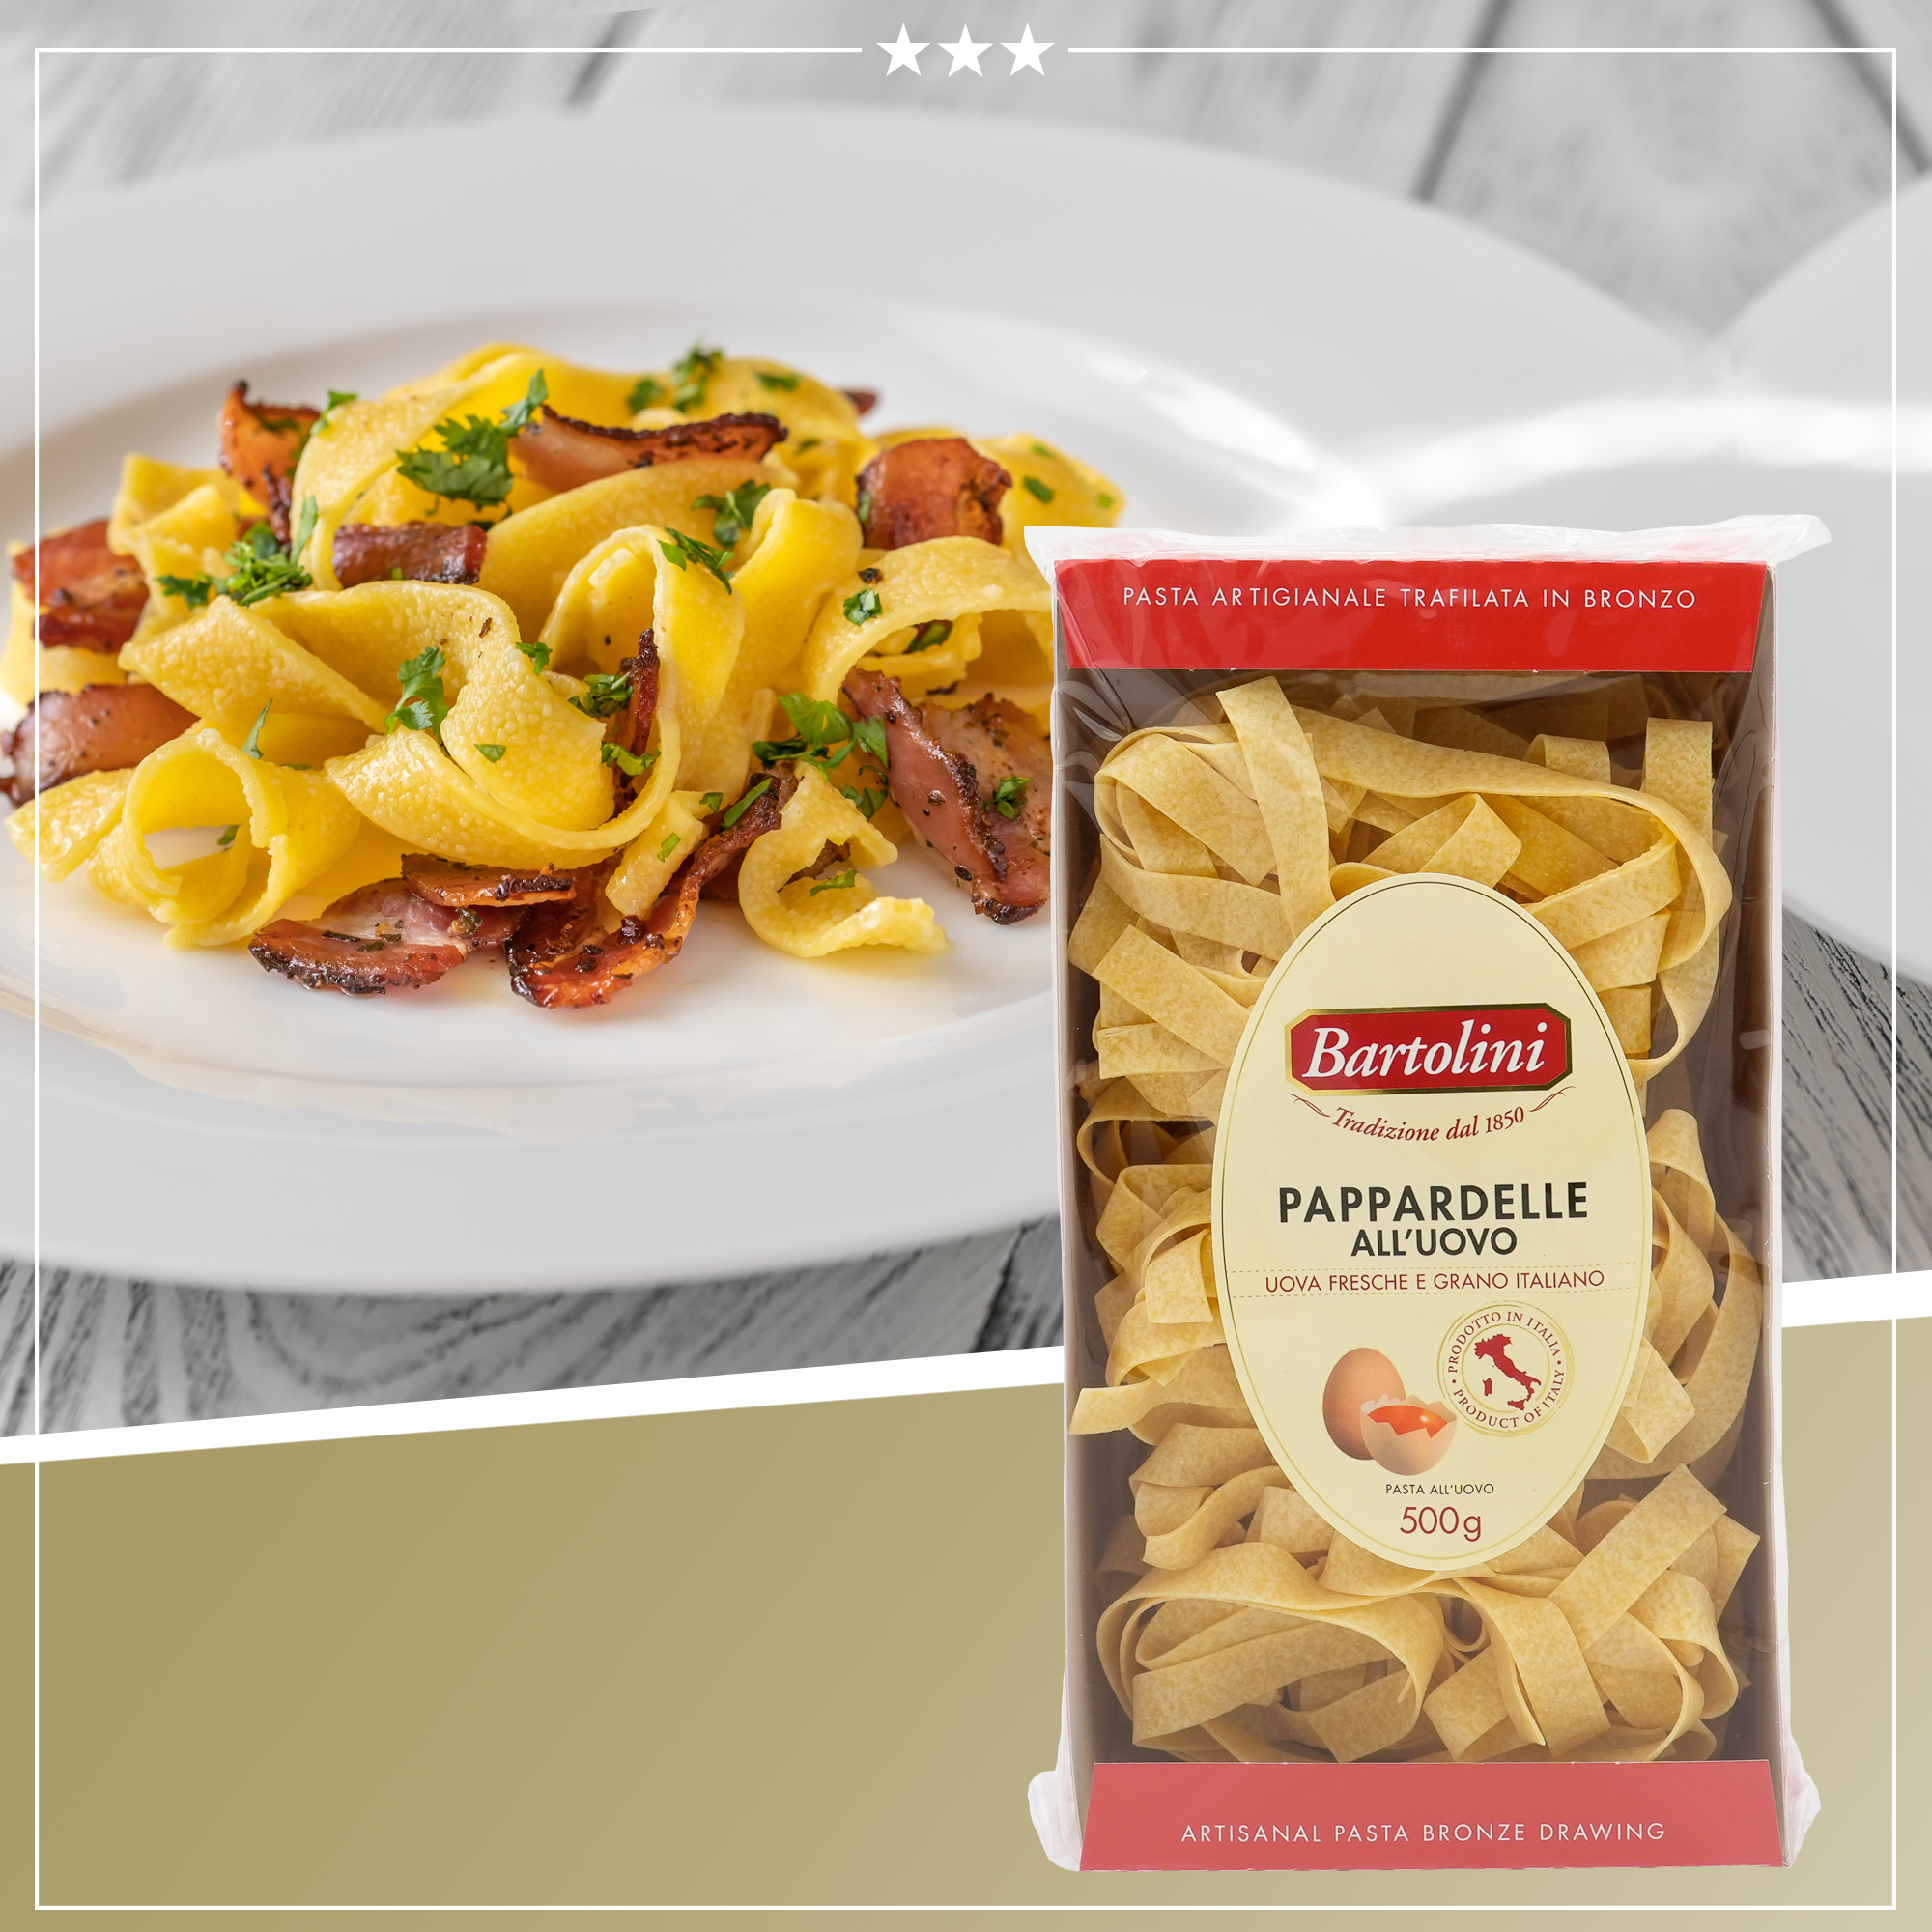 PAPPARDELLE ALL’UOVO | BARTOLINI | 500g | aus Italien | Premium Pasta